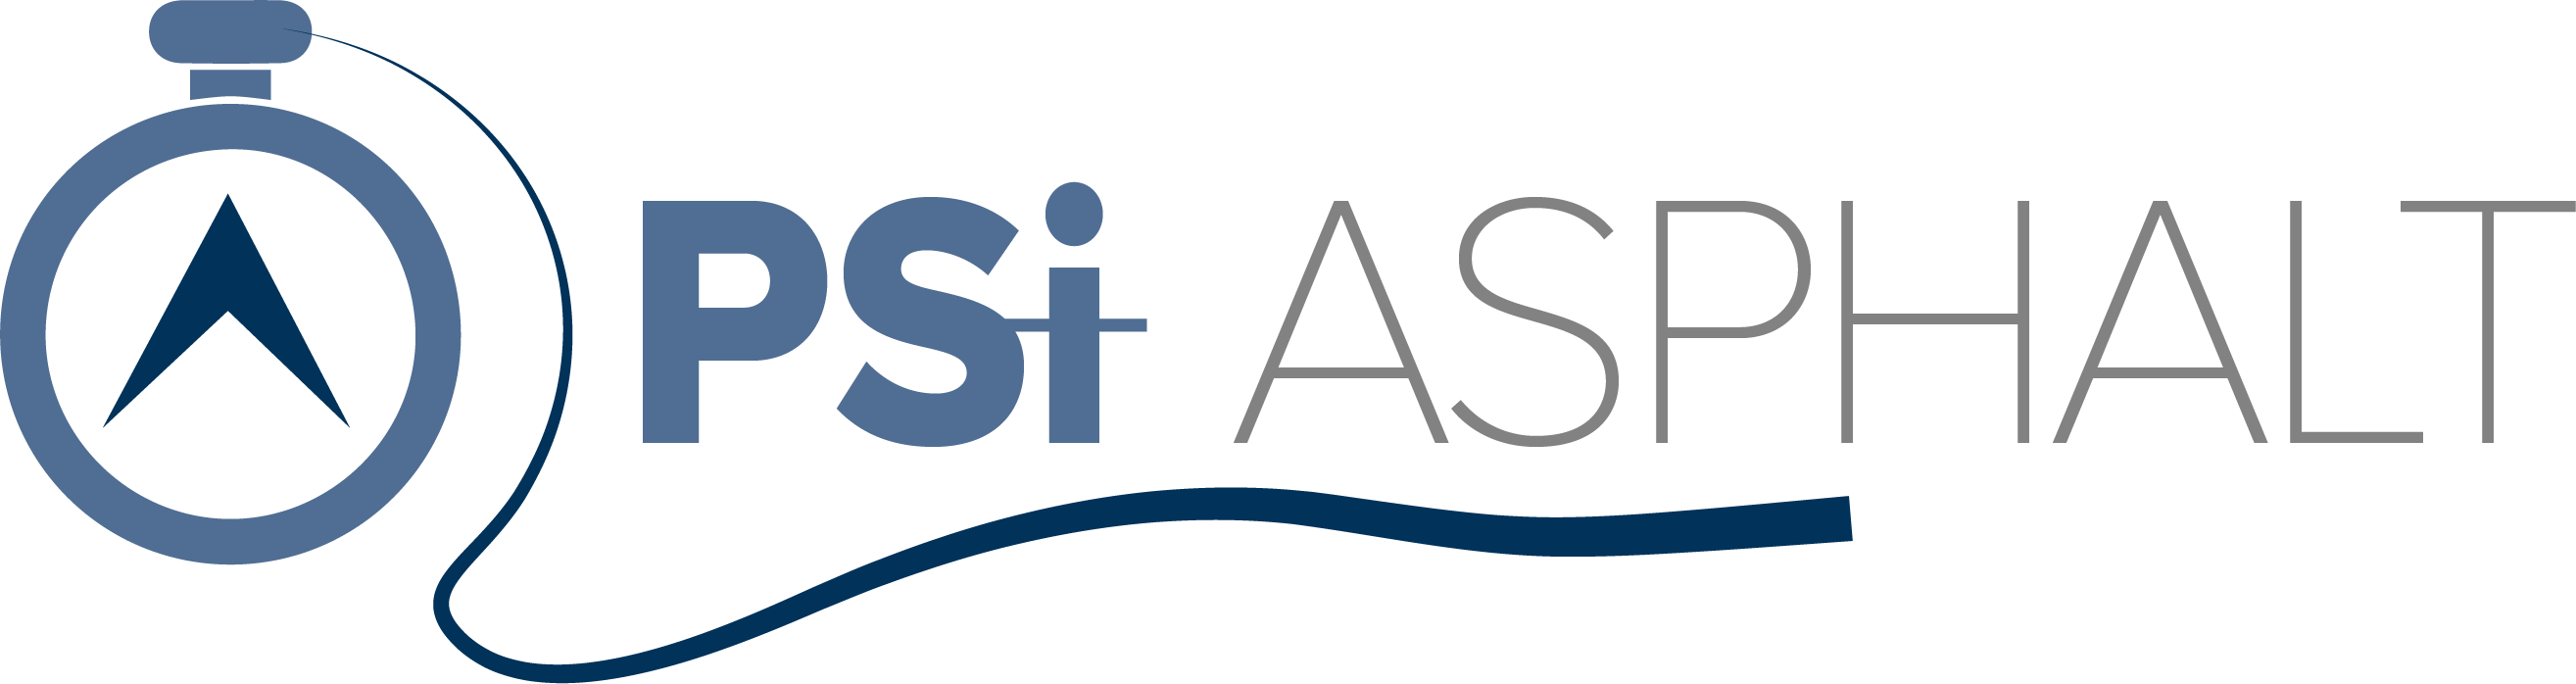 psi asphalt 2019 logo